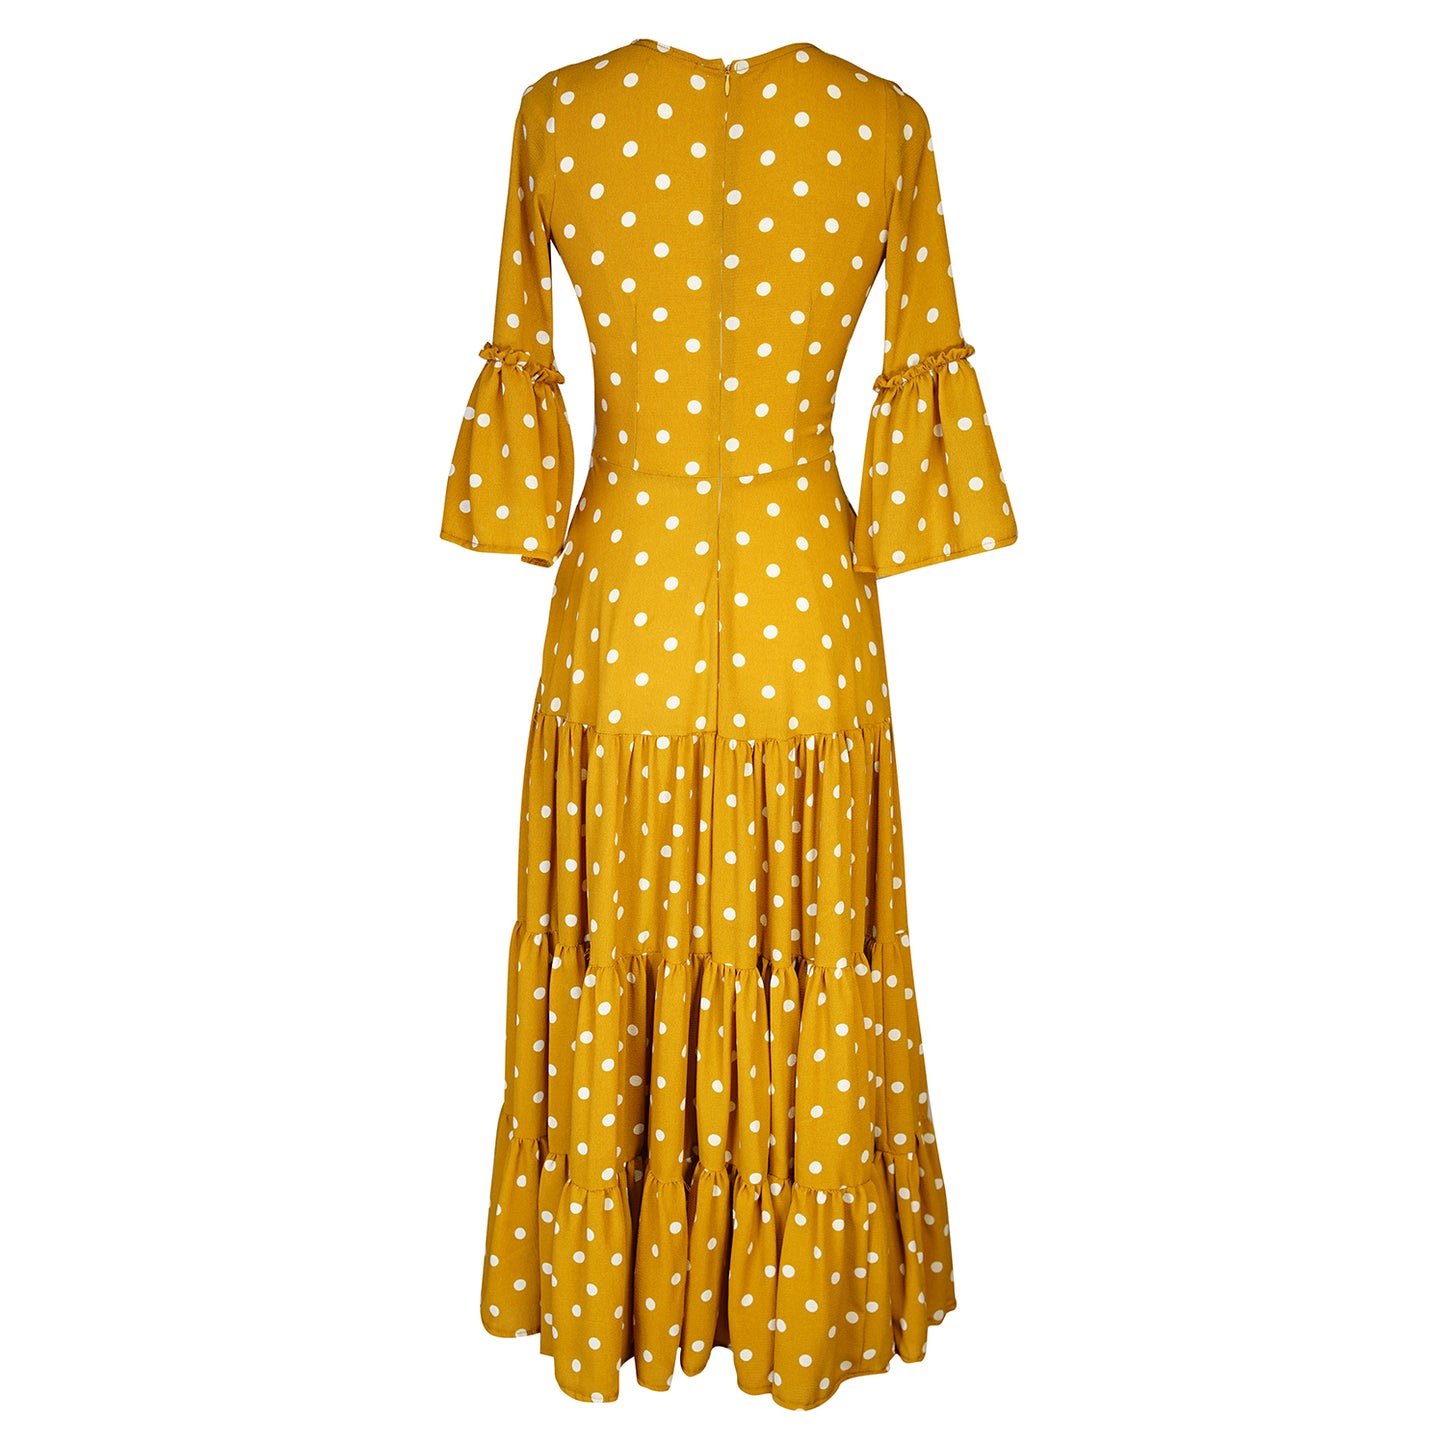 Petite Mustard Polka Dot 3-Tier Ruffle Dress